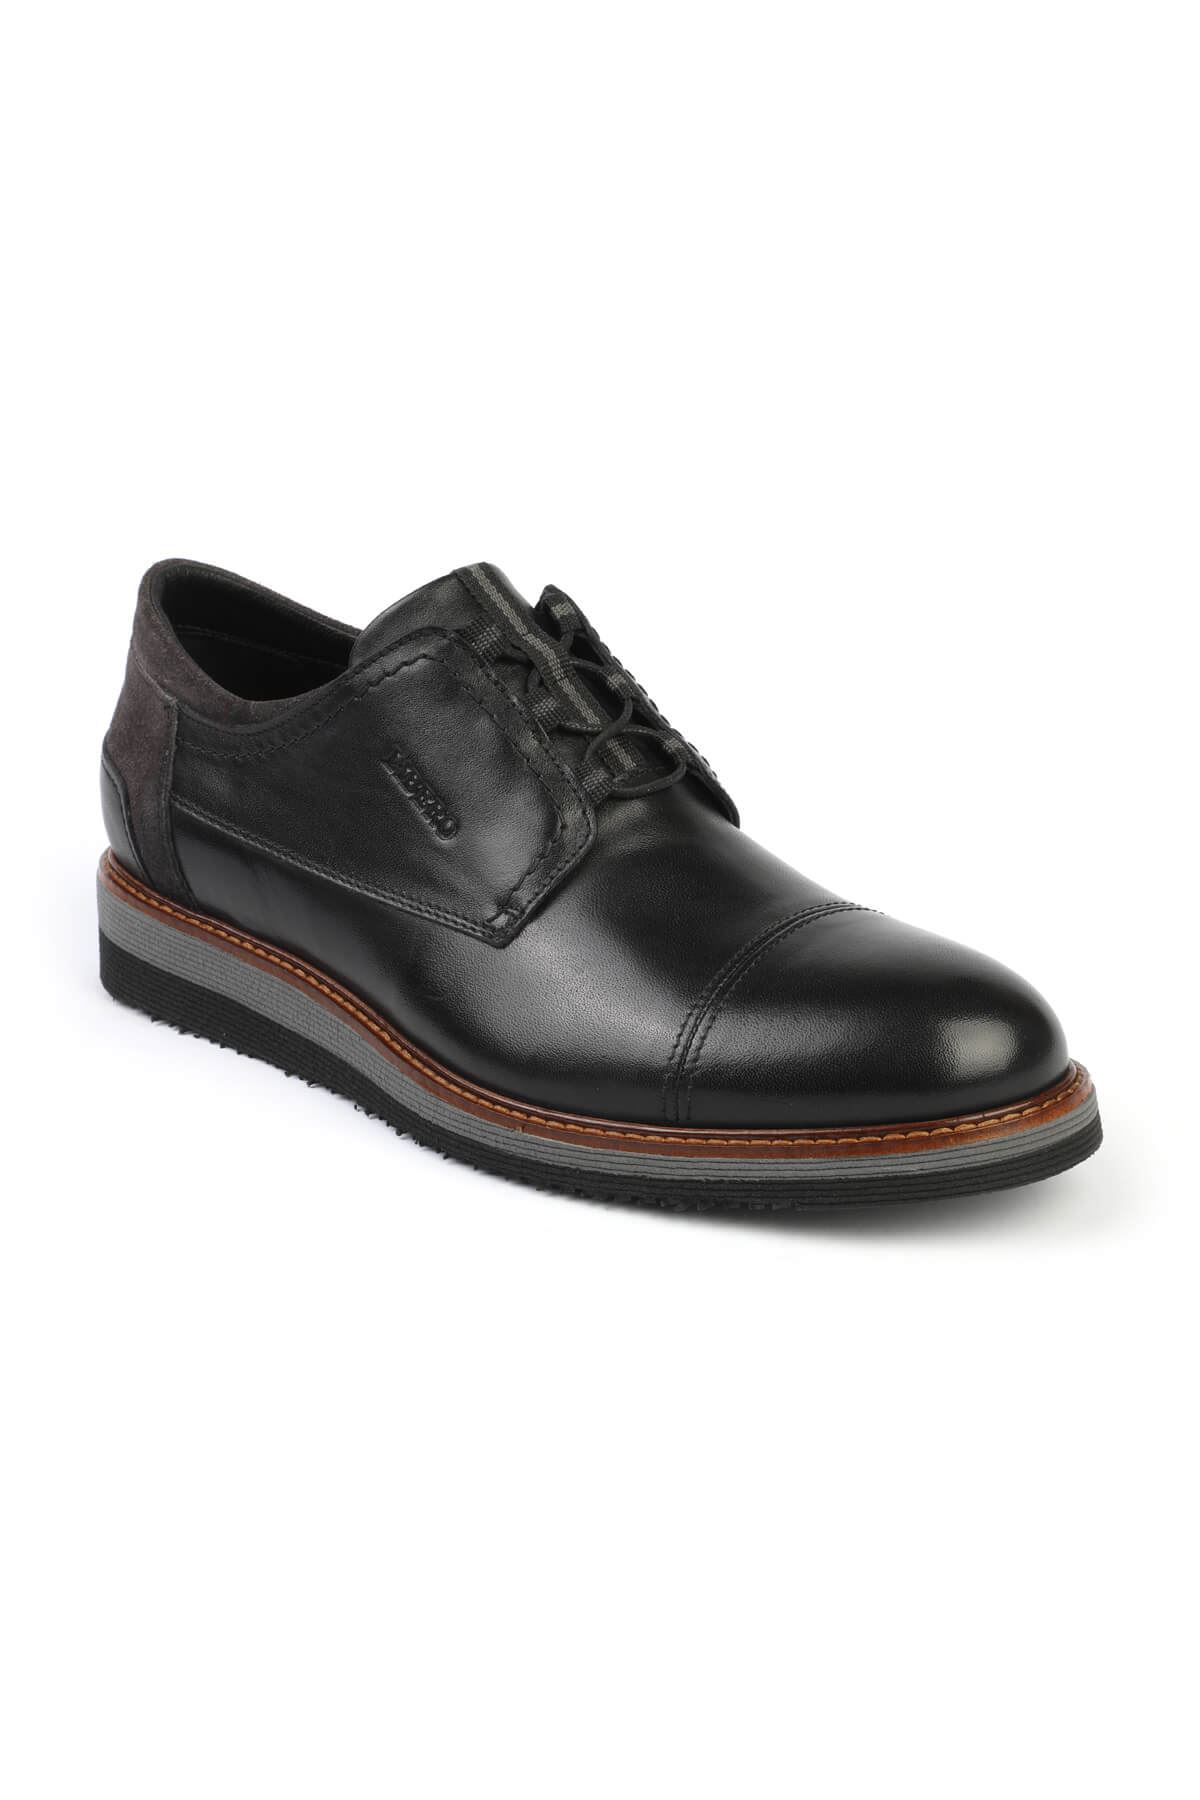 Libero 2646 Black Oxford Shoes